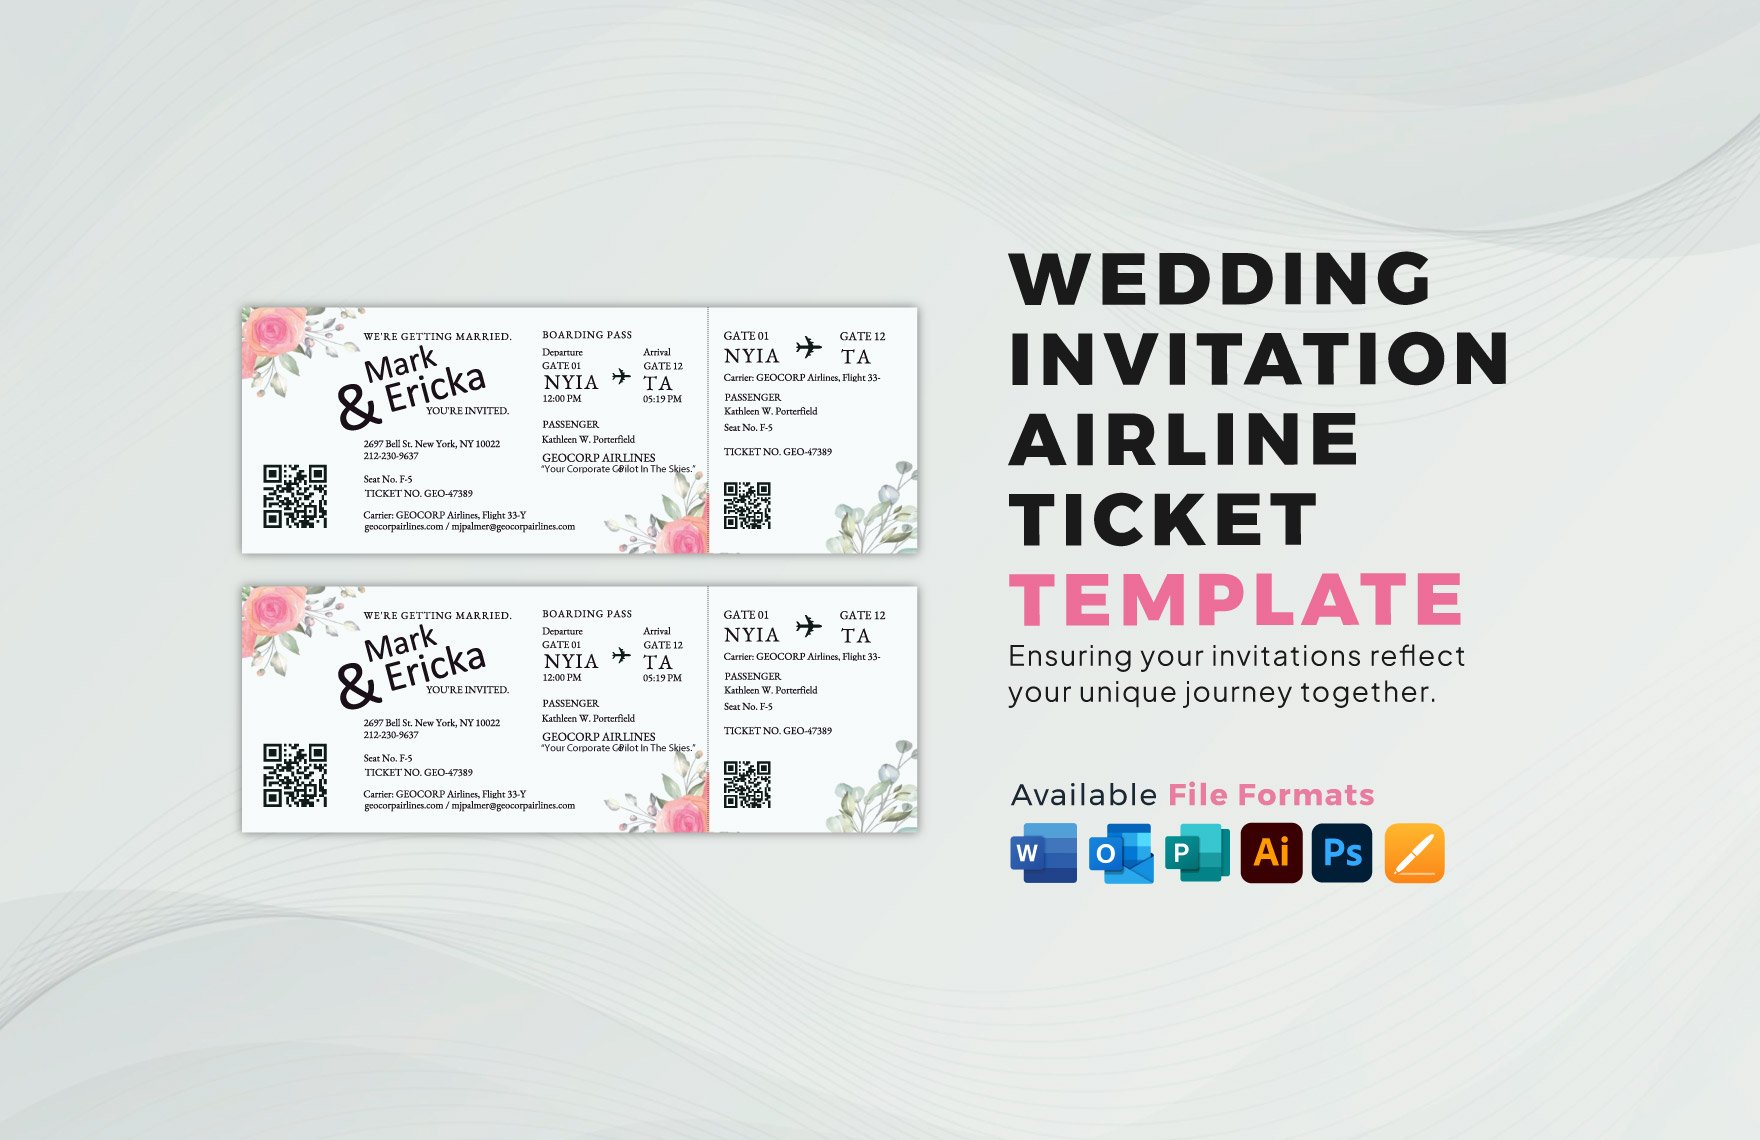 Wedding Invitation Airline Ticket Template